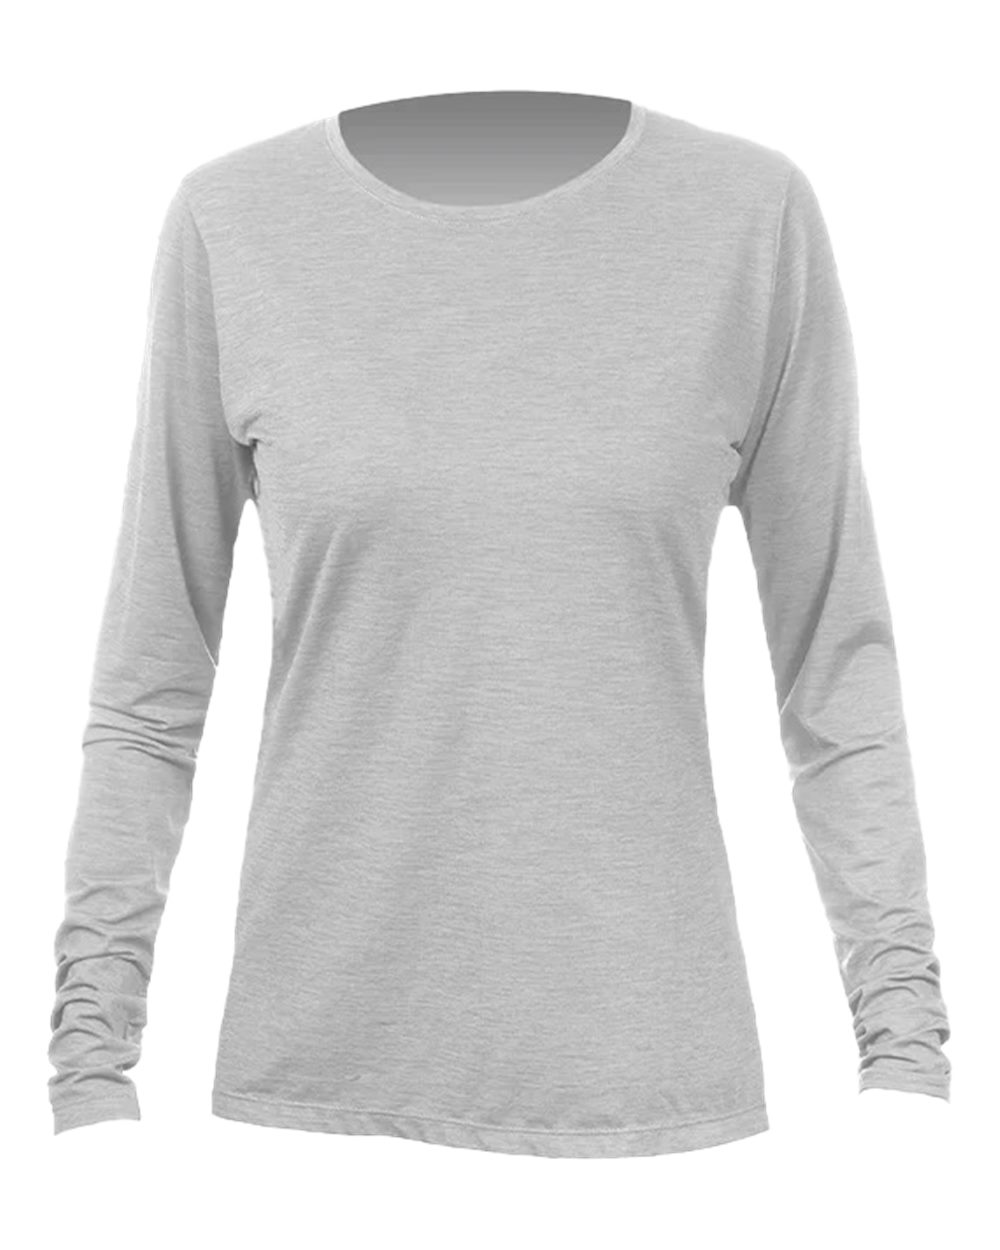 Anetik WSBRZL0 - Women's Breeze Tech Long Sleeve T-Shirt